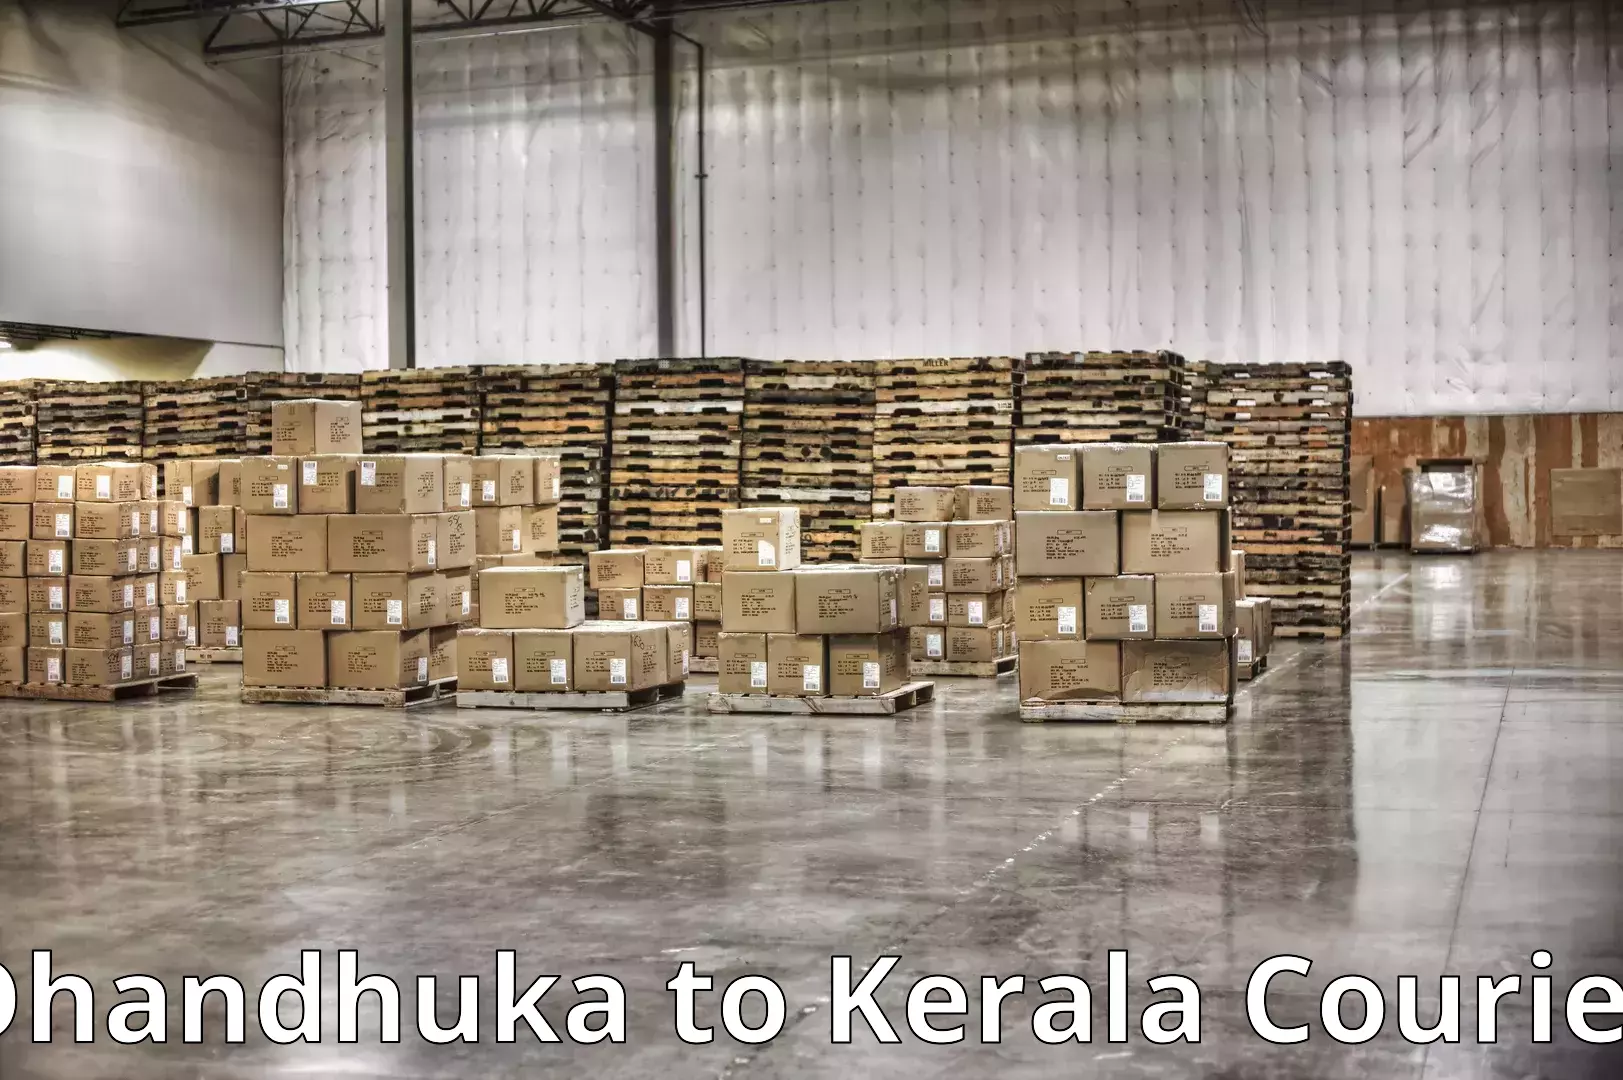 Moving and packing experts Dhandhuka to Kerala